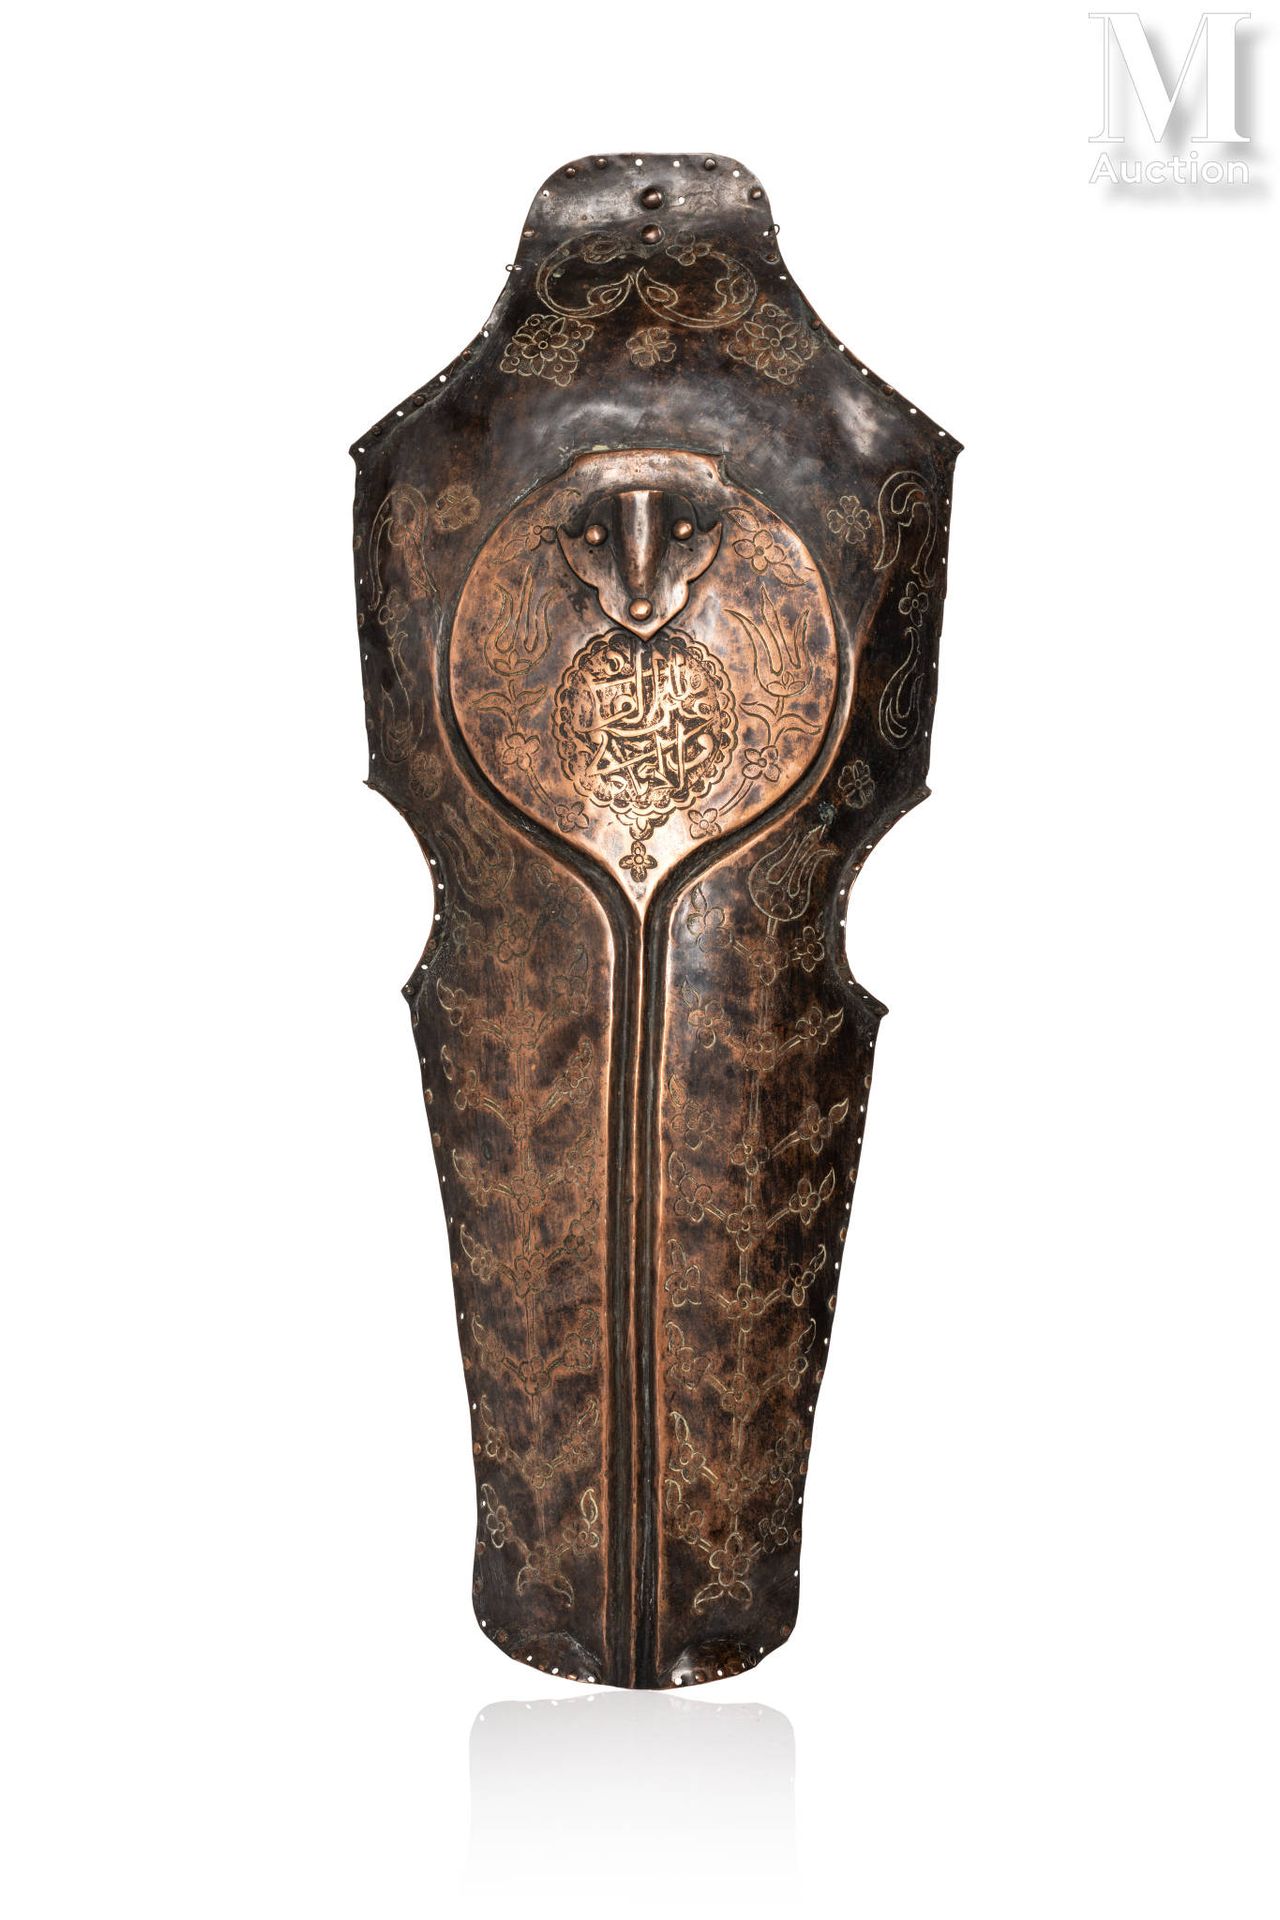 Chanfrein de cheval en cuivre 土耳其，19-20世纪
一个大型的锤制铜马面具，口部有一个双槽，四周刻有奥斯曼风格的花卉图案。沟槽开&hellip;